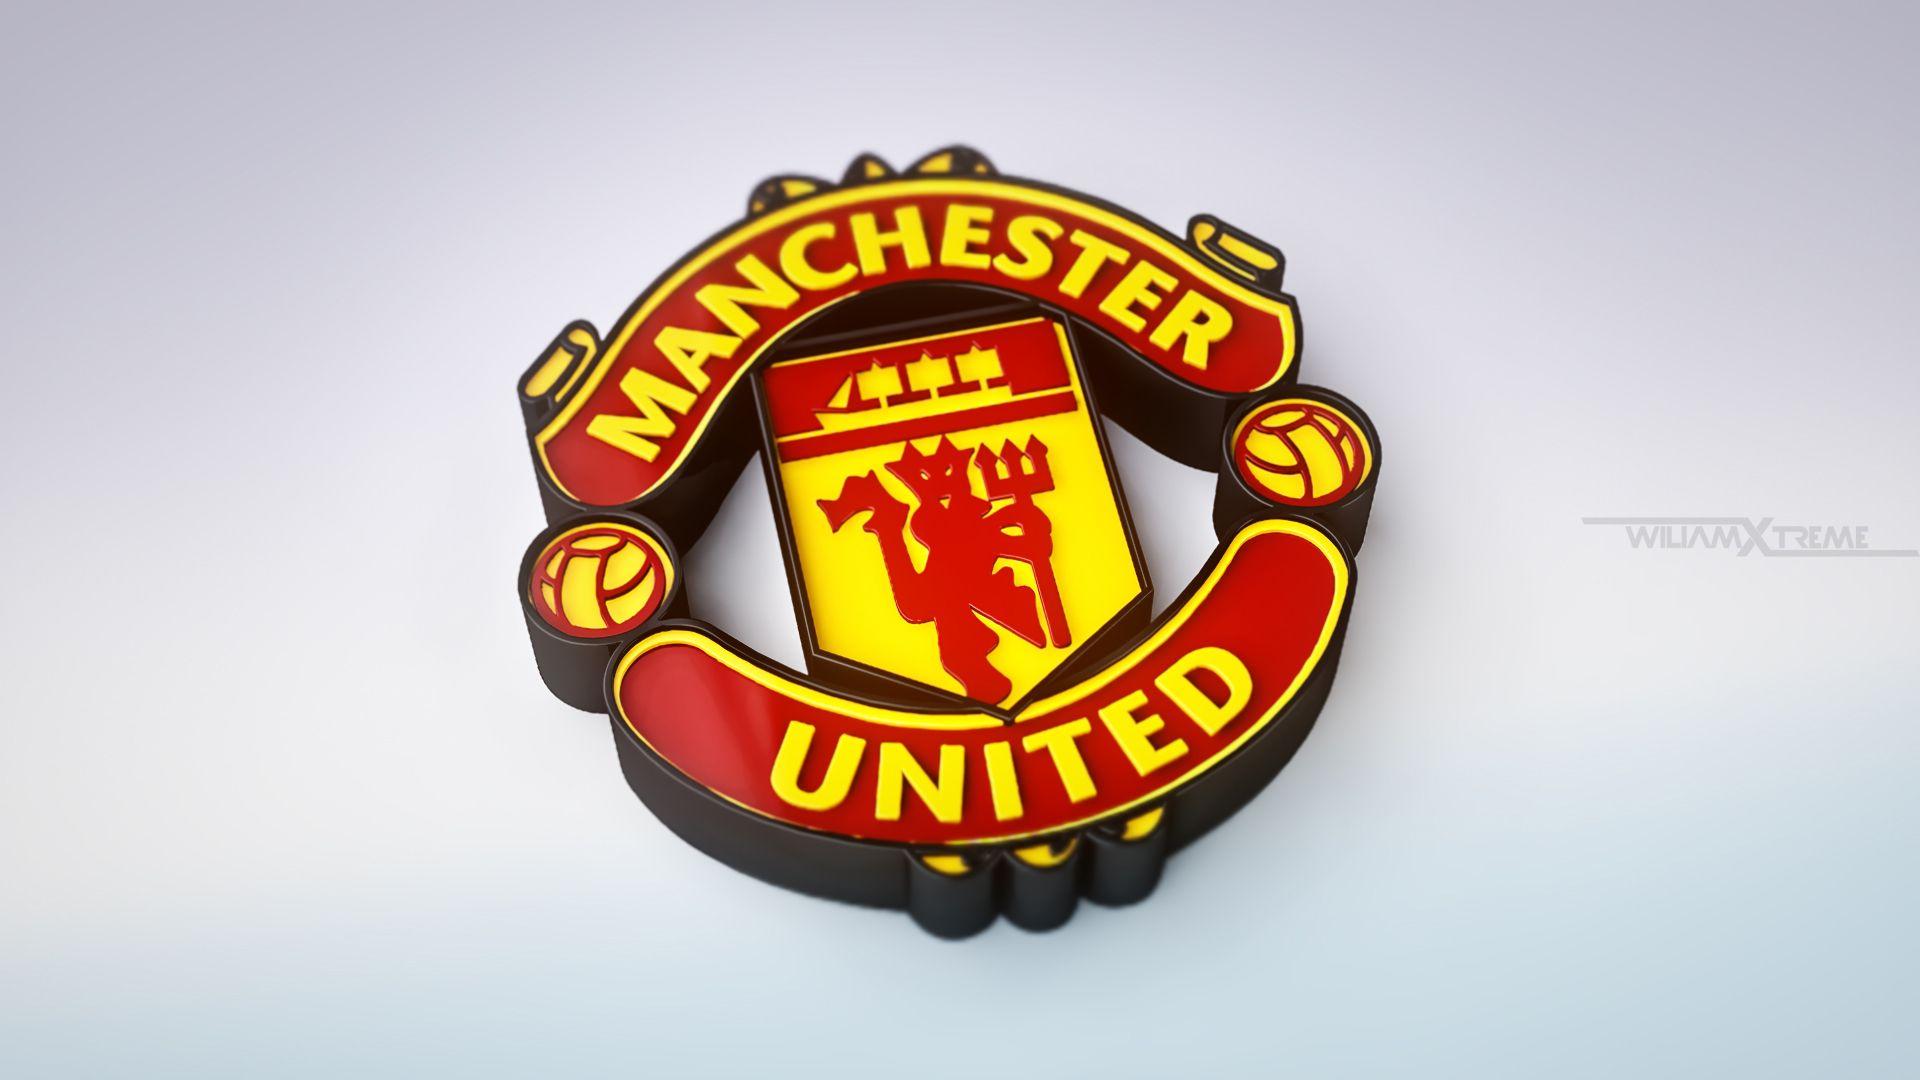 Manchester United Logo Wallpaper